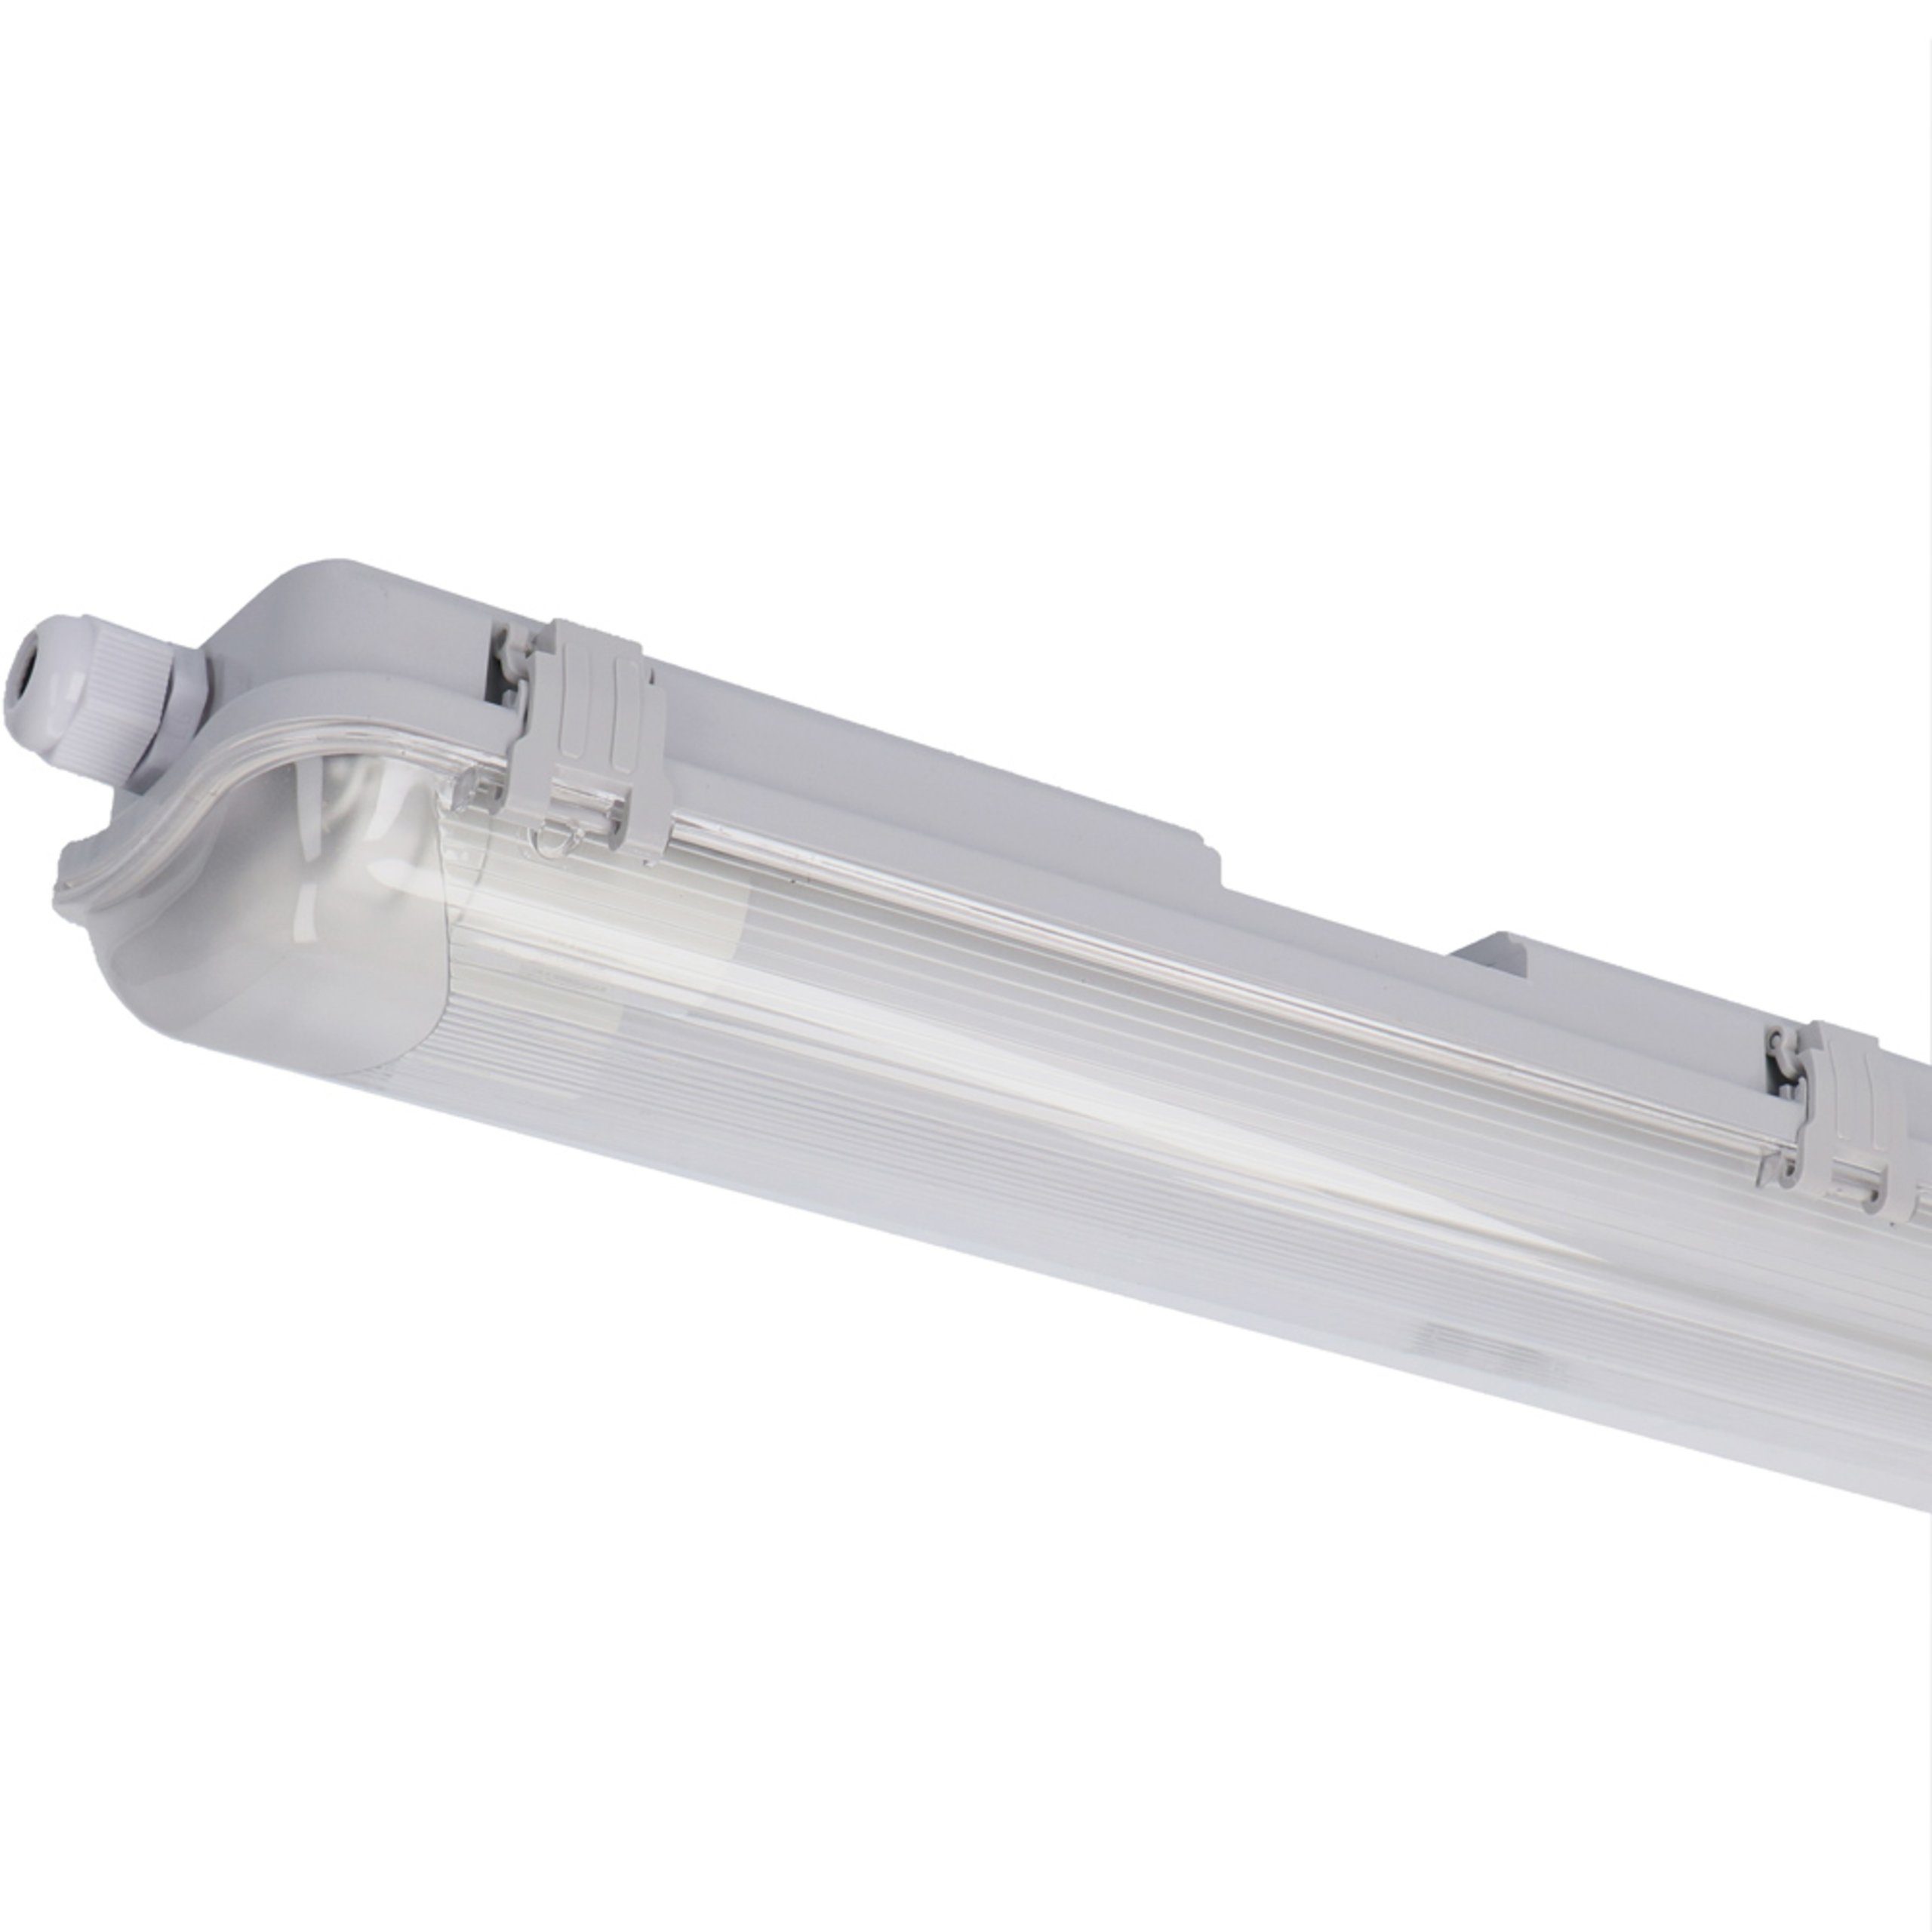 Feuchtraumleuchte, LED Deckenleuchte Basic IP65 2x LED-Röhren mit LED's LED, light cm 2400113_04 18W 120 neutralweiß